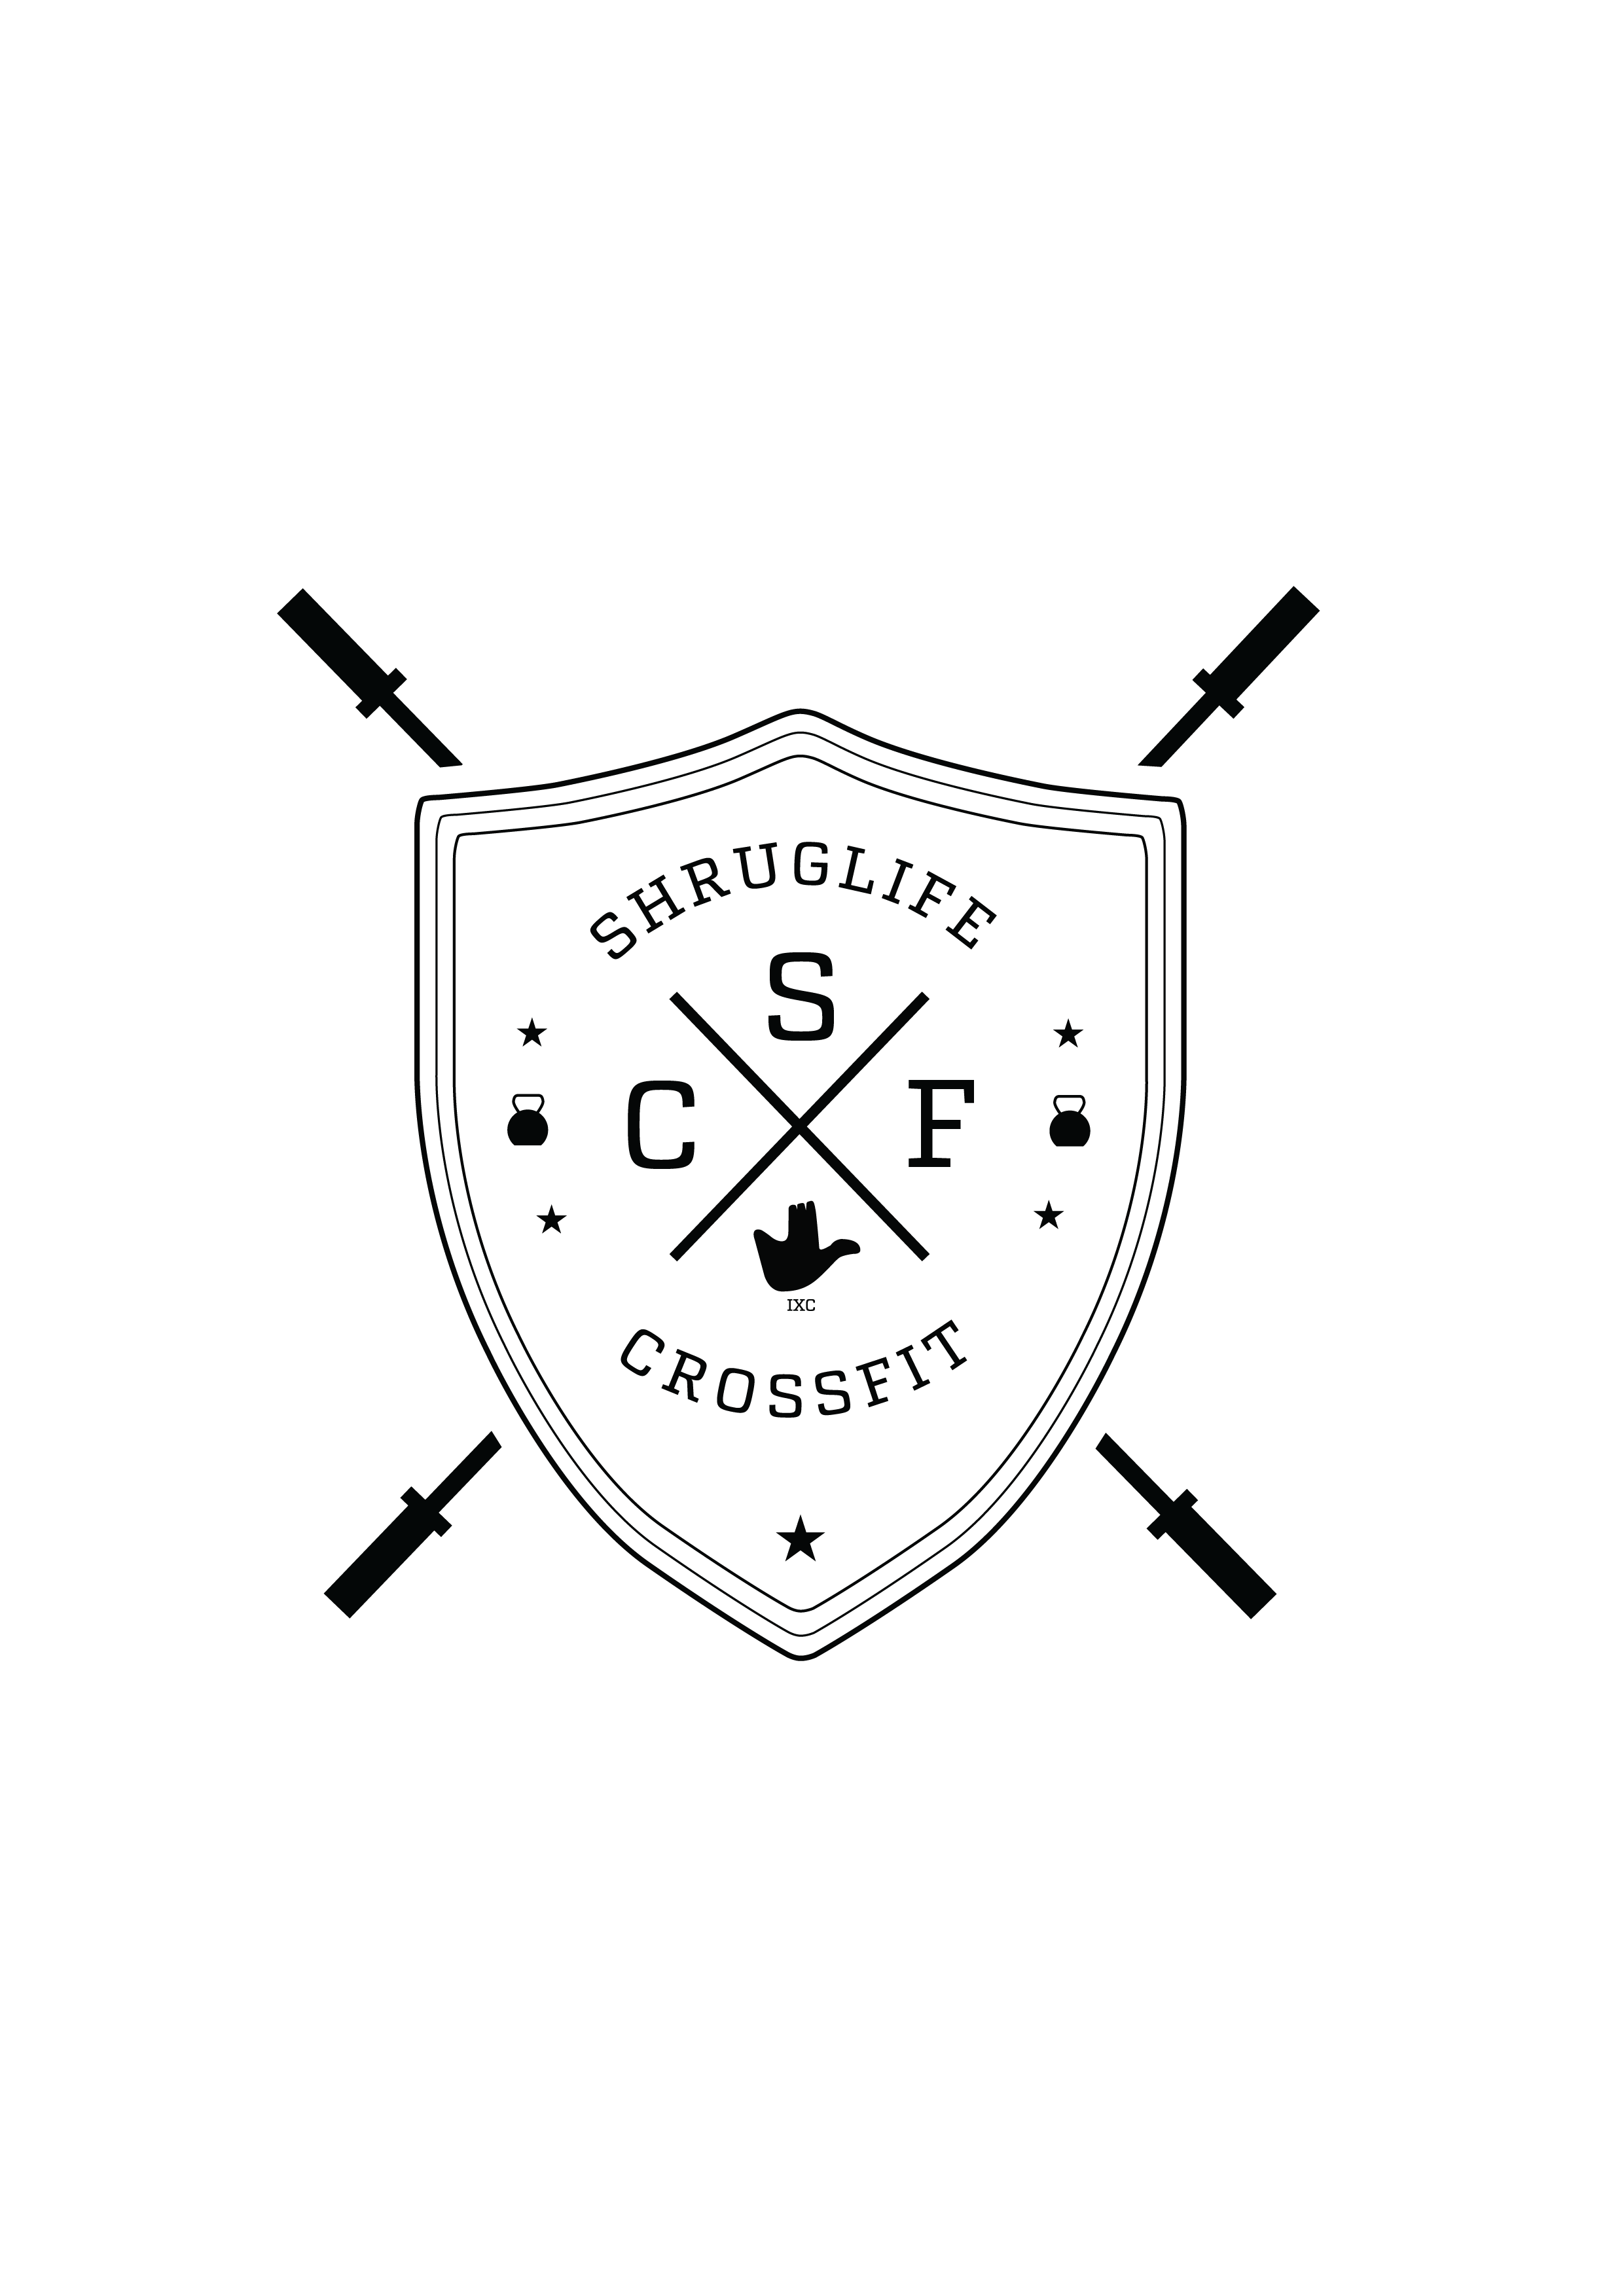 Shruglife crossfit logo-02